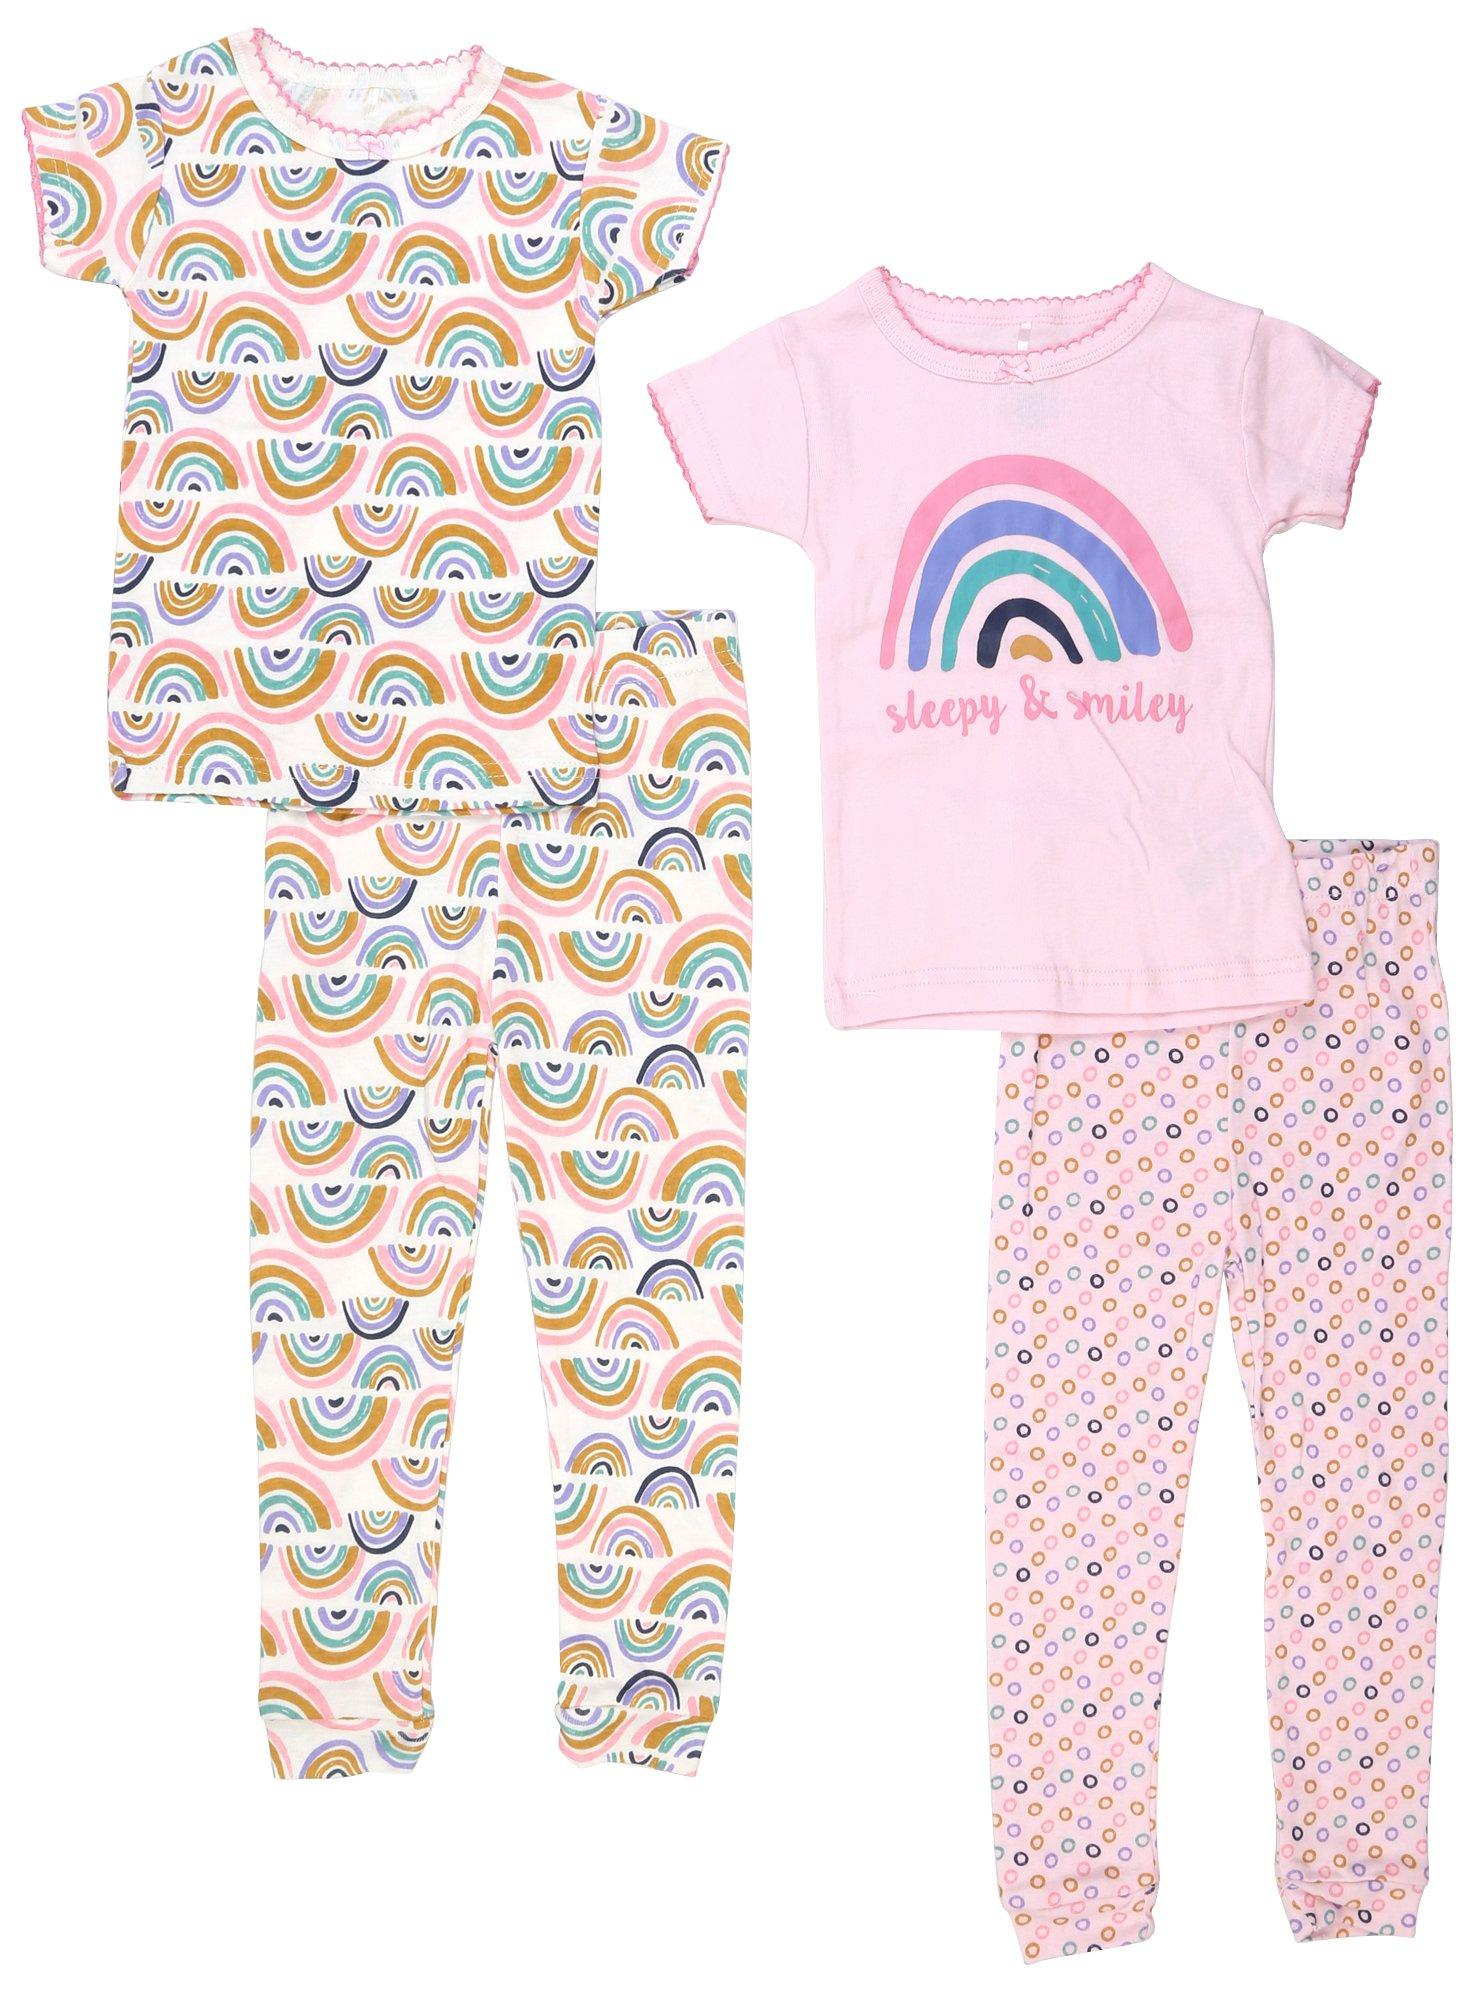 Cutie Pie Toddler Girls Sleepy & Smiley Rainbow  Pants Set